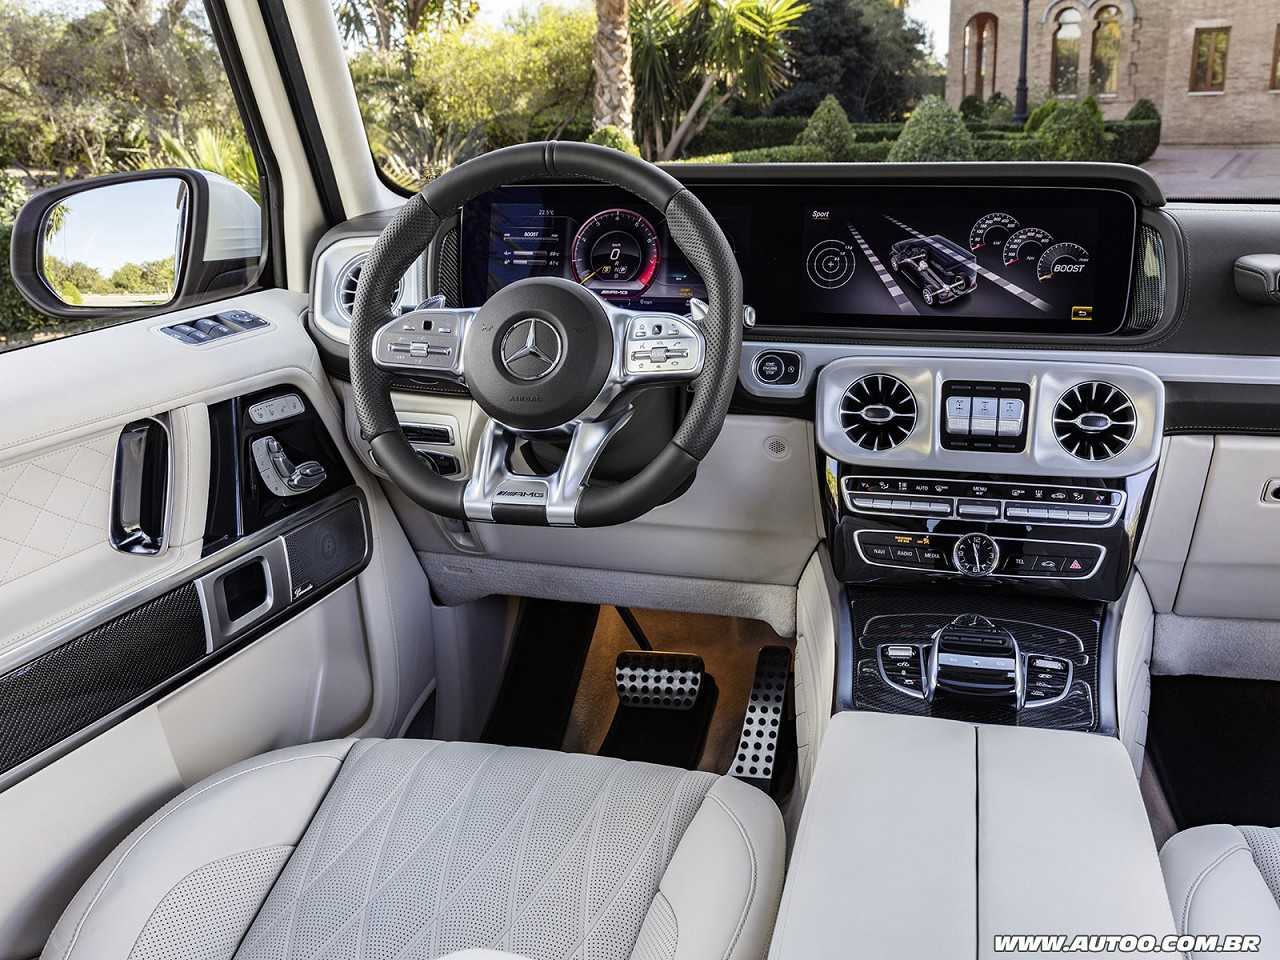 Mercedes-BenzClasse G 2019 - painel